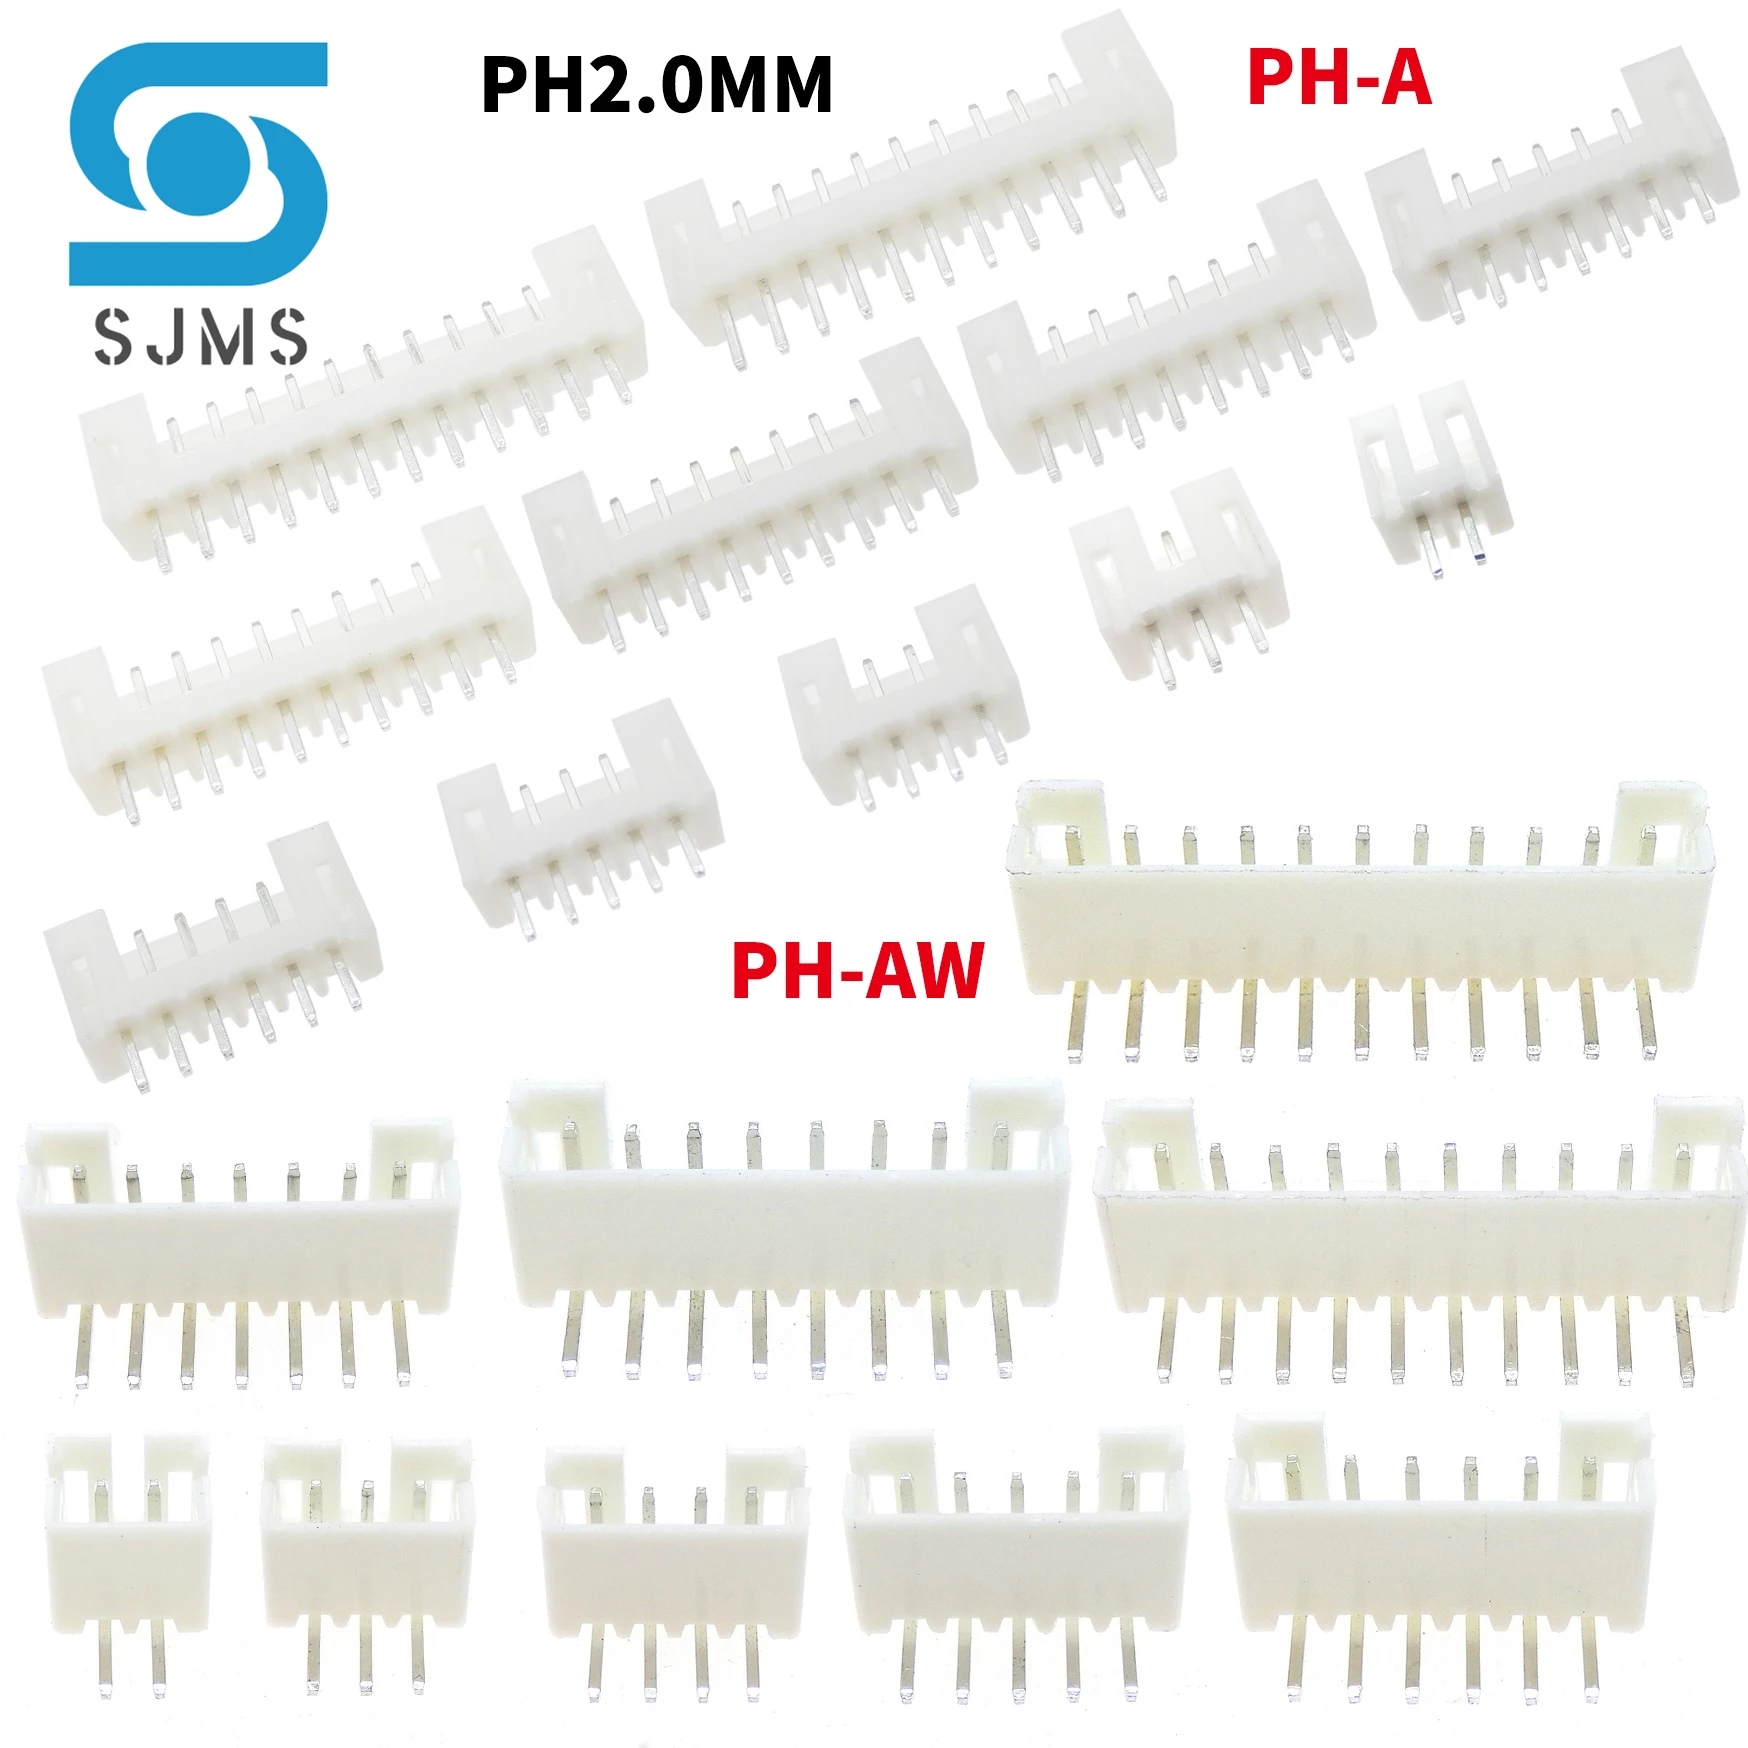 

50pcs JST PH2.0 2mm Connectors Leads PH 2.0 2P 3P 4P 5P 6P 7P 8P 9P 10P 11P 12 pin Header 2.0mm male material PH-A straight pins